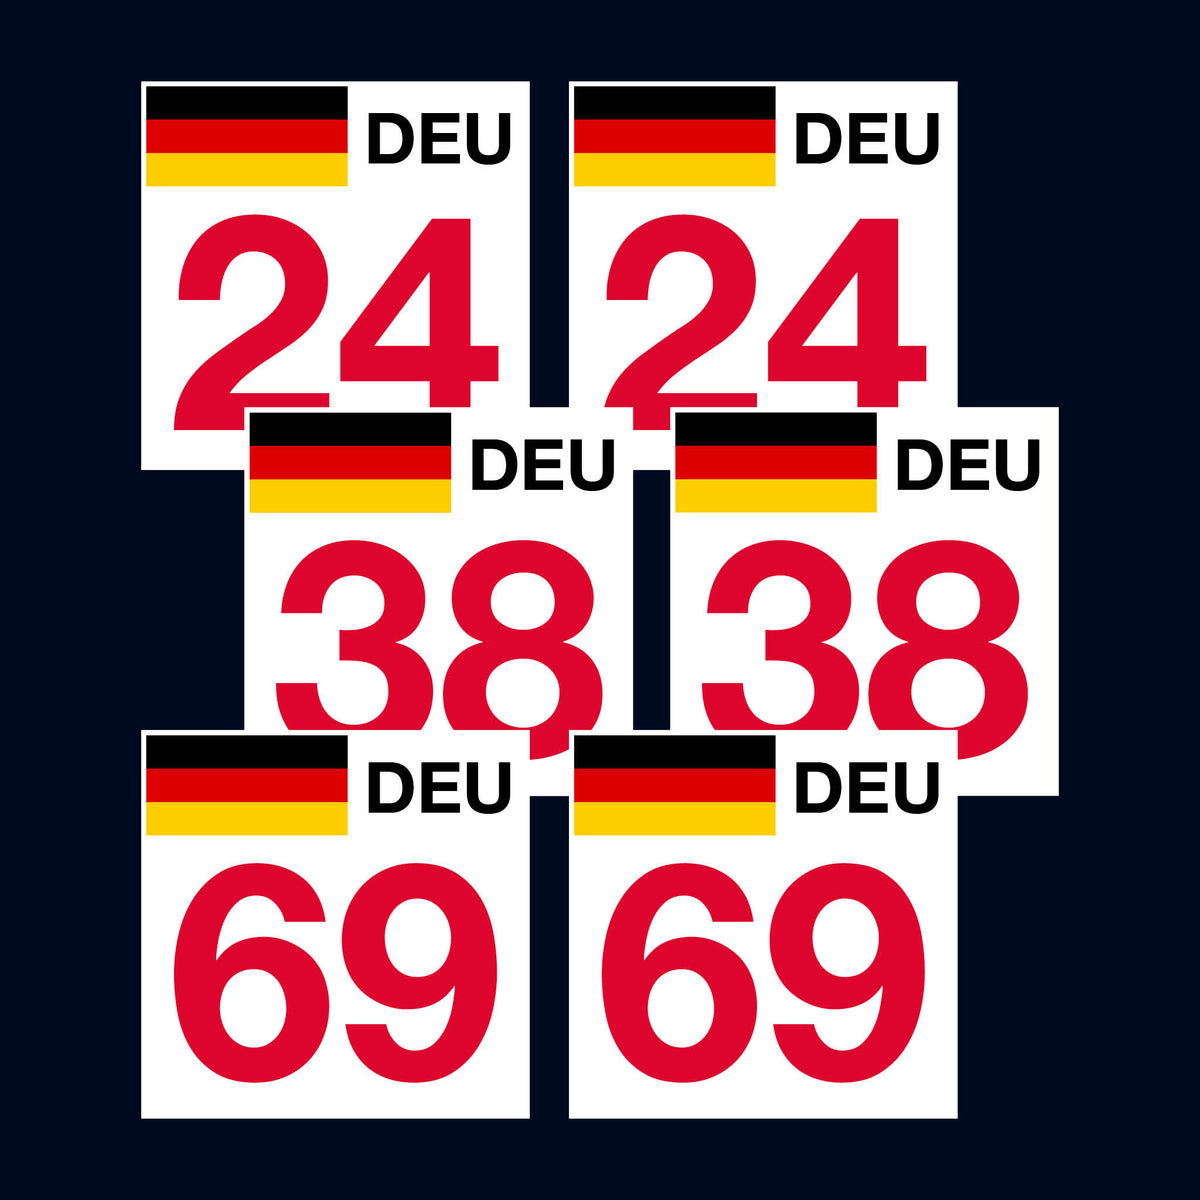 DEU Door Numbers (Pair)